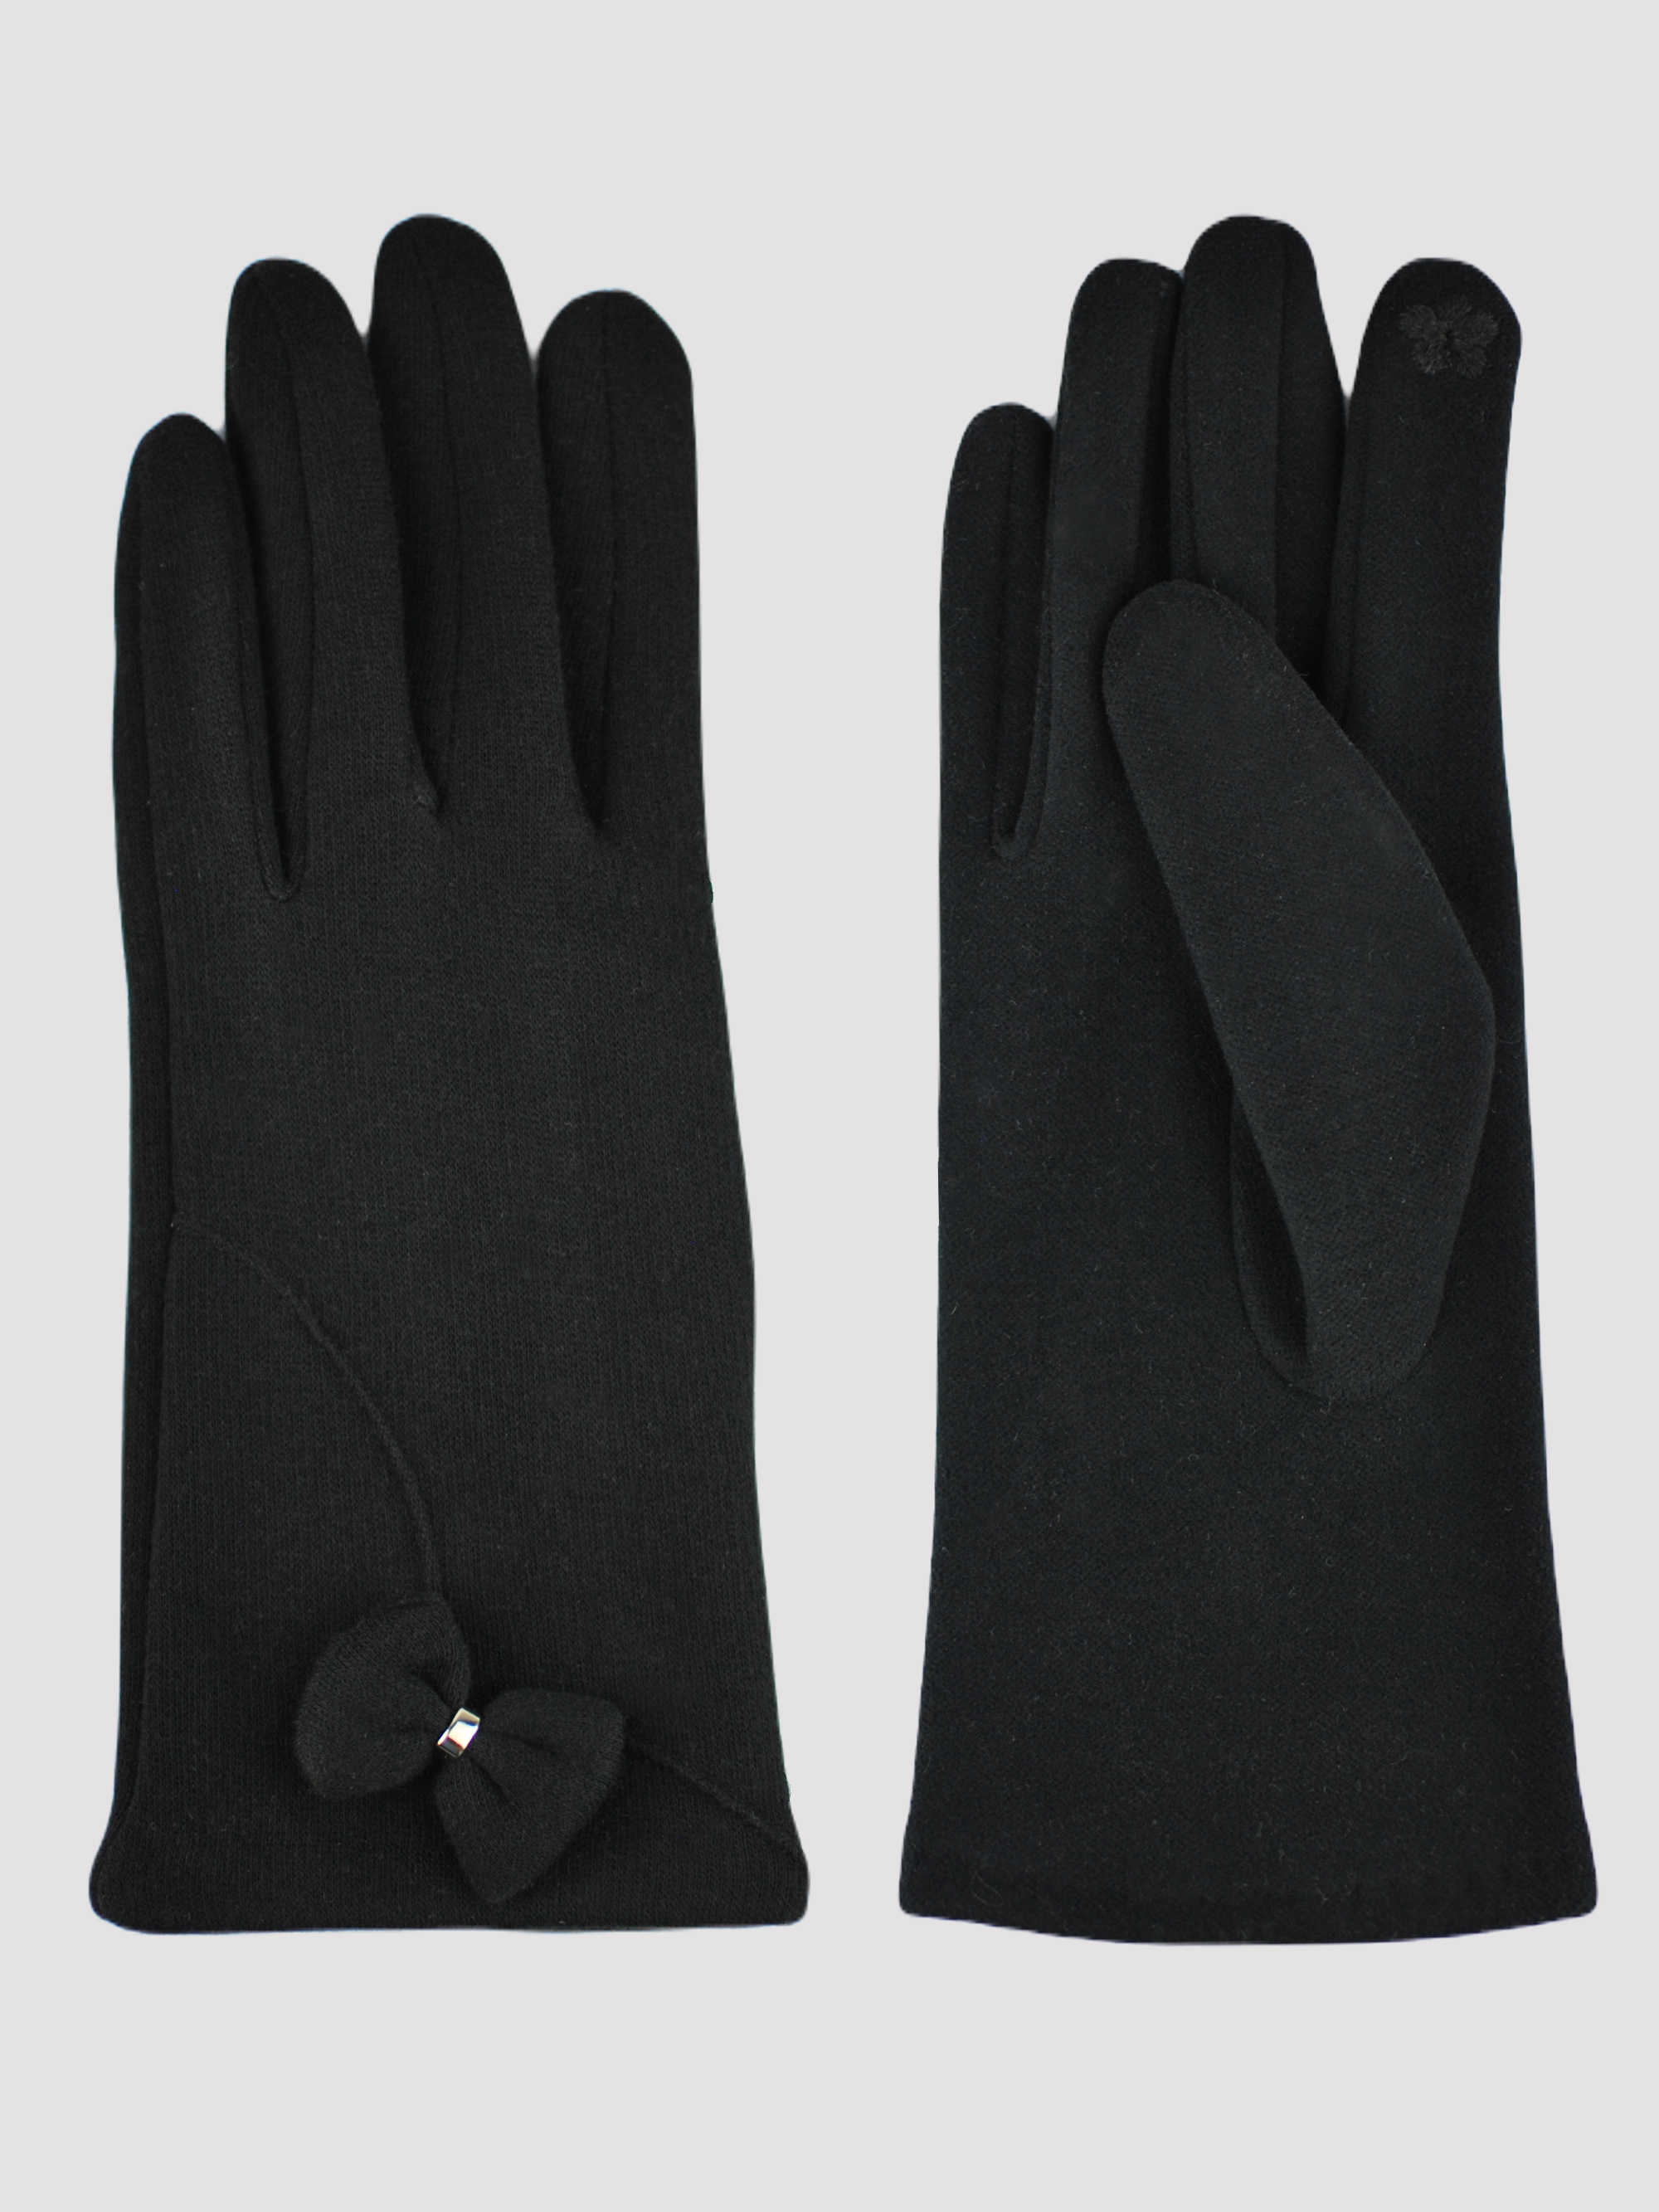 NOVITI Woman's Gloves RW014-W-01